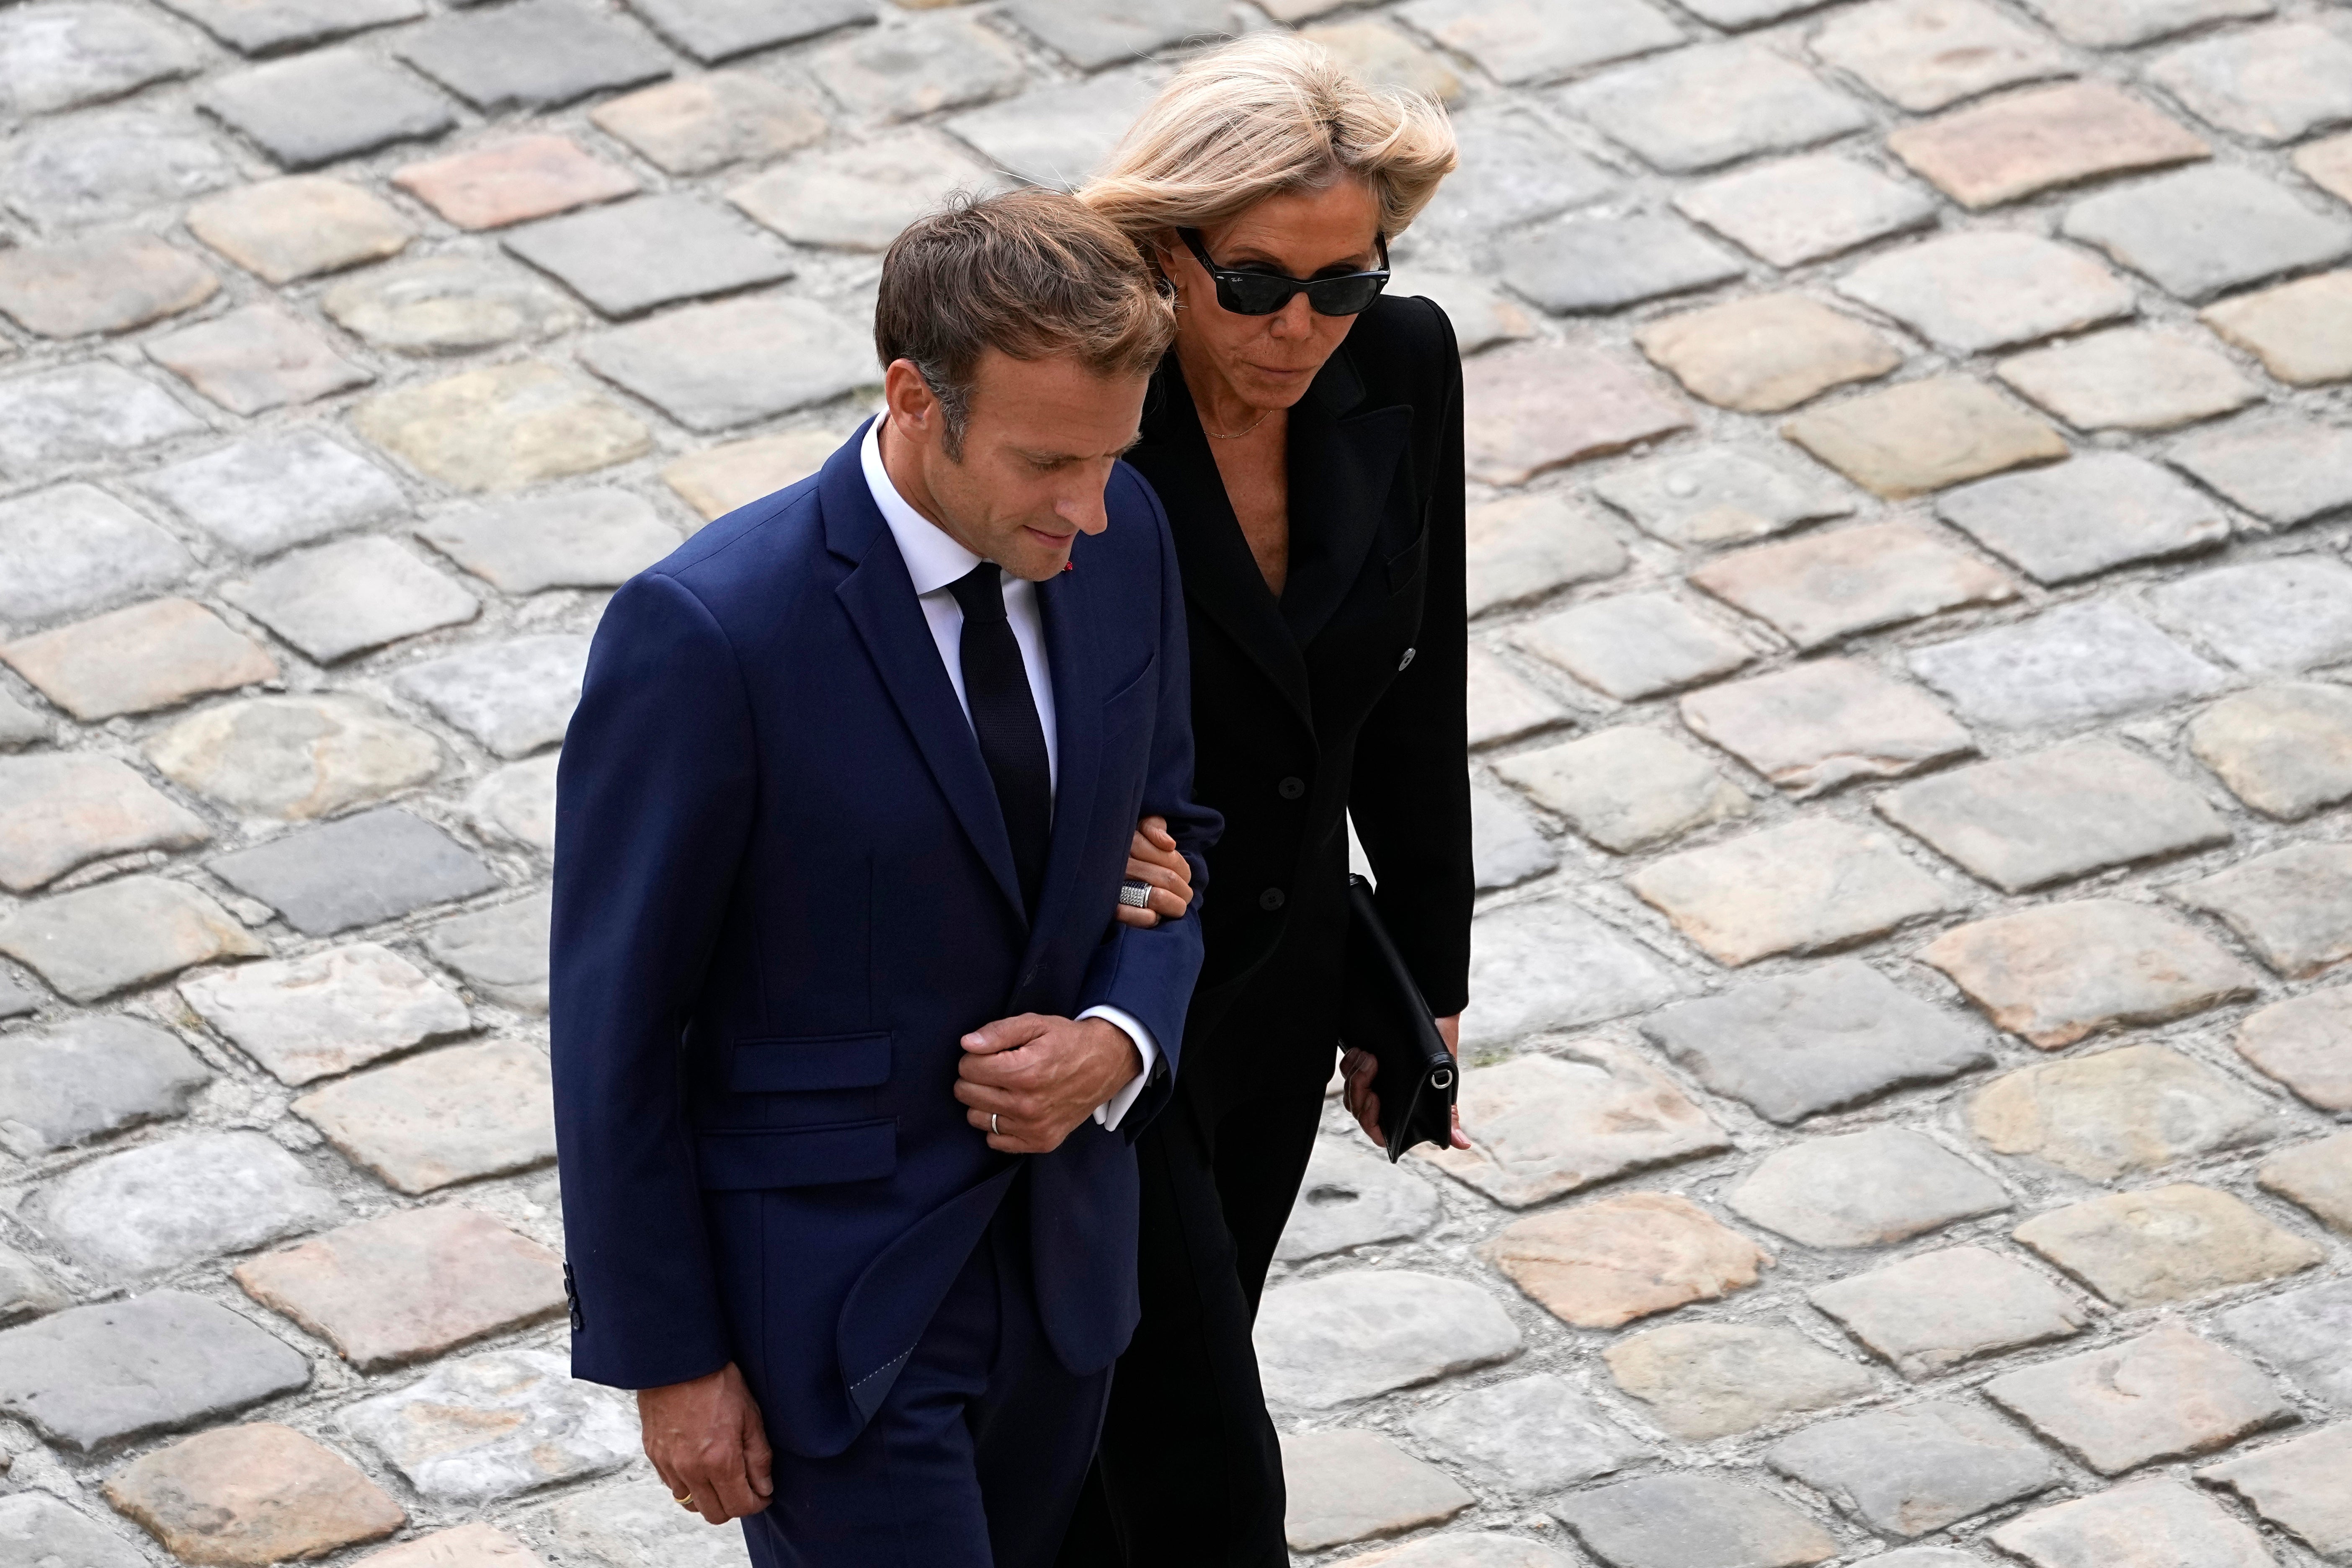 File photo: Emmanuel Macron and Brigitte Macron